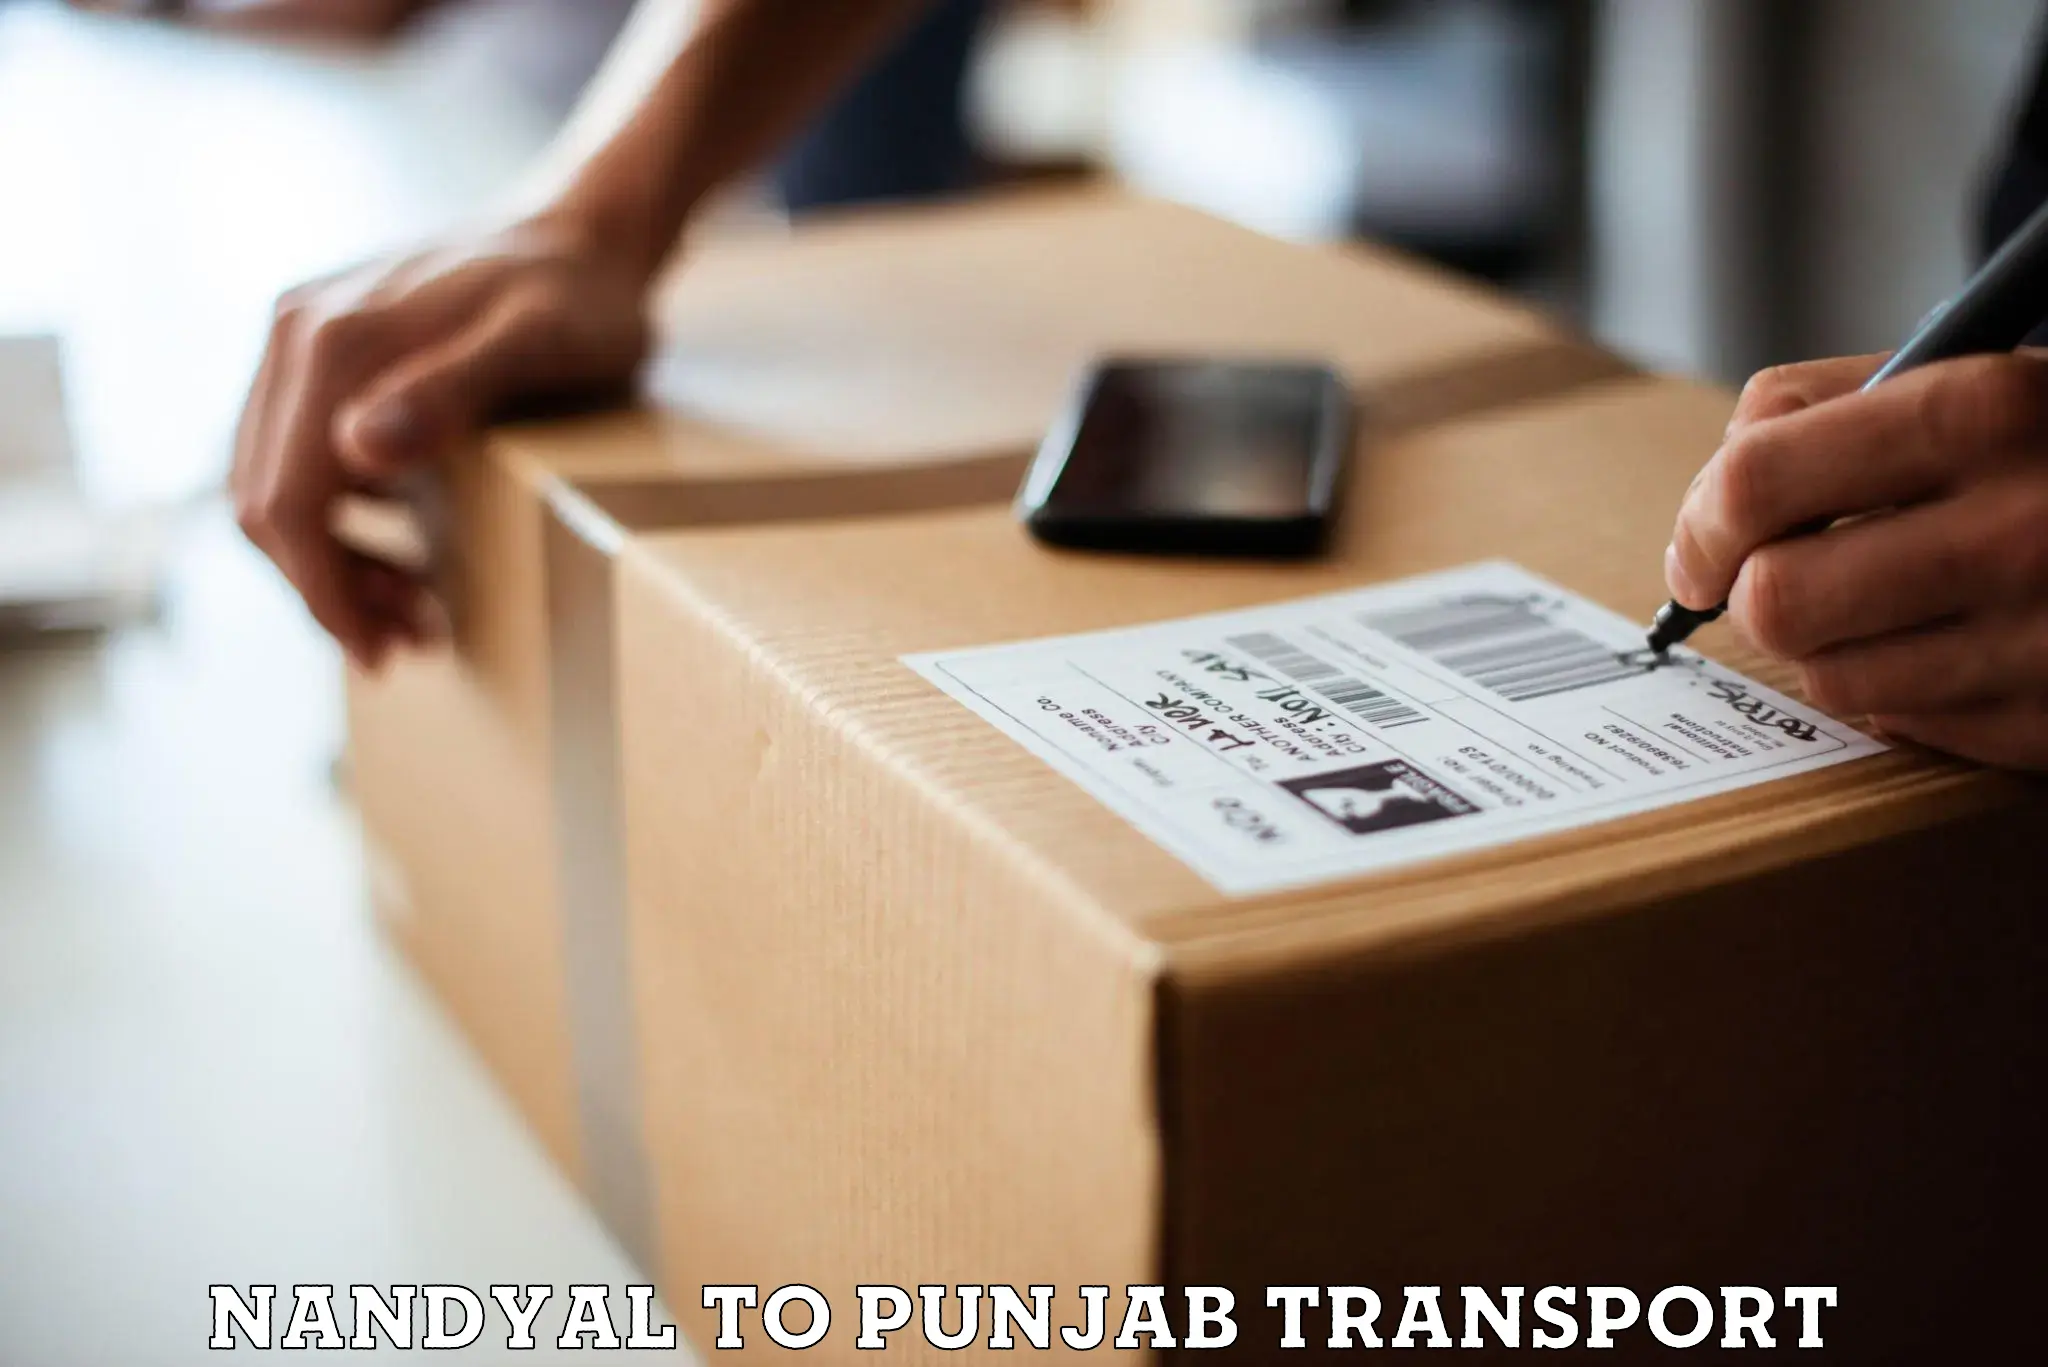 Delivery service Nandyal to Punjab